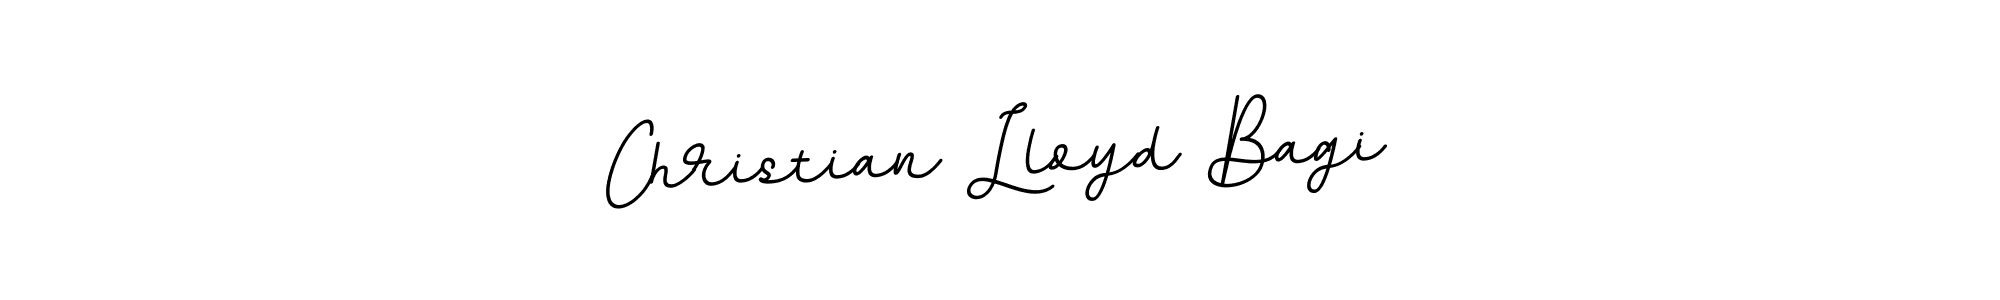 How to Draw Christian Lloyd Bagi signature style? BallpointsItalic-DORy9 is a latest design signature styles for name Christian Lloyd Bagi. Christian Lloyd Bagi signature style 11 images and pictures png